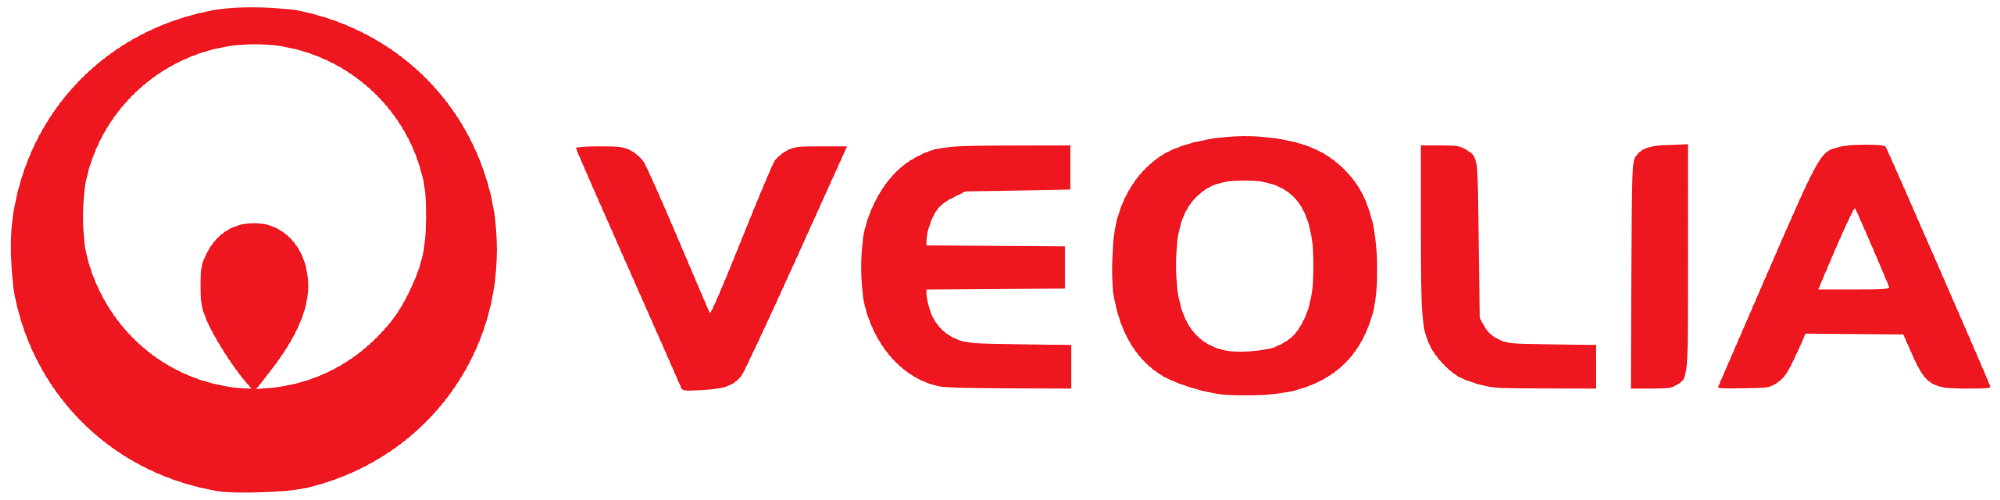 Veolia Water Technologies & Solutions logo.